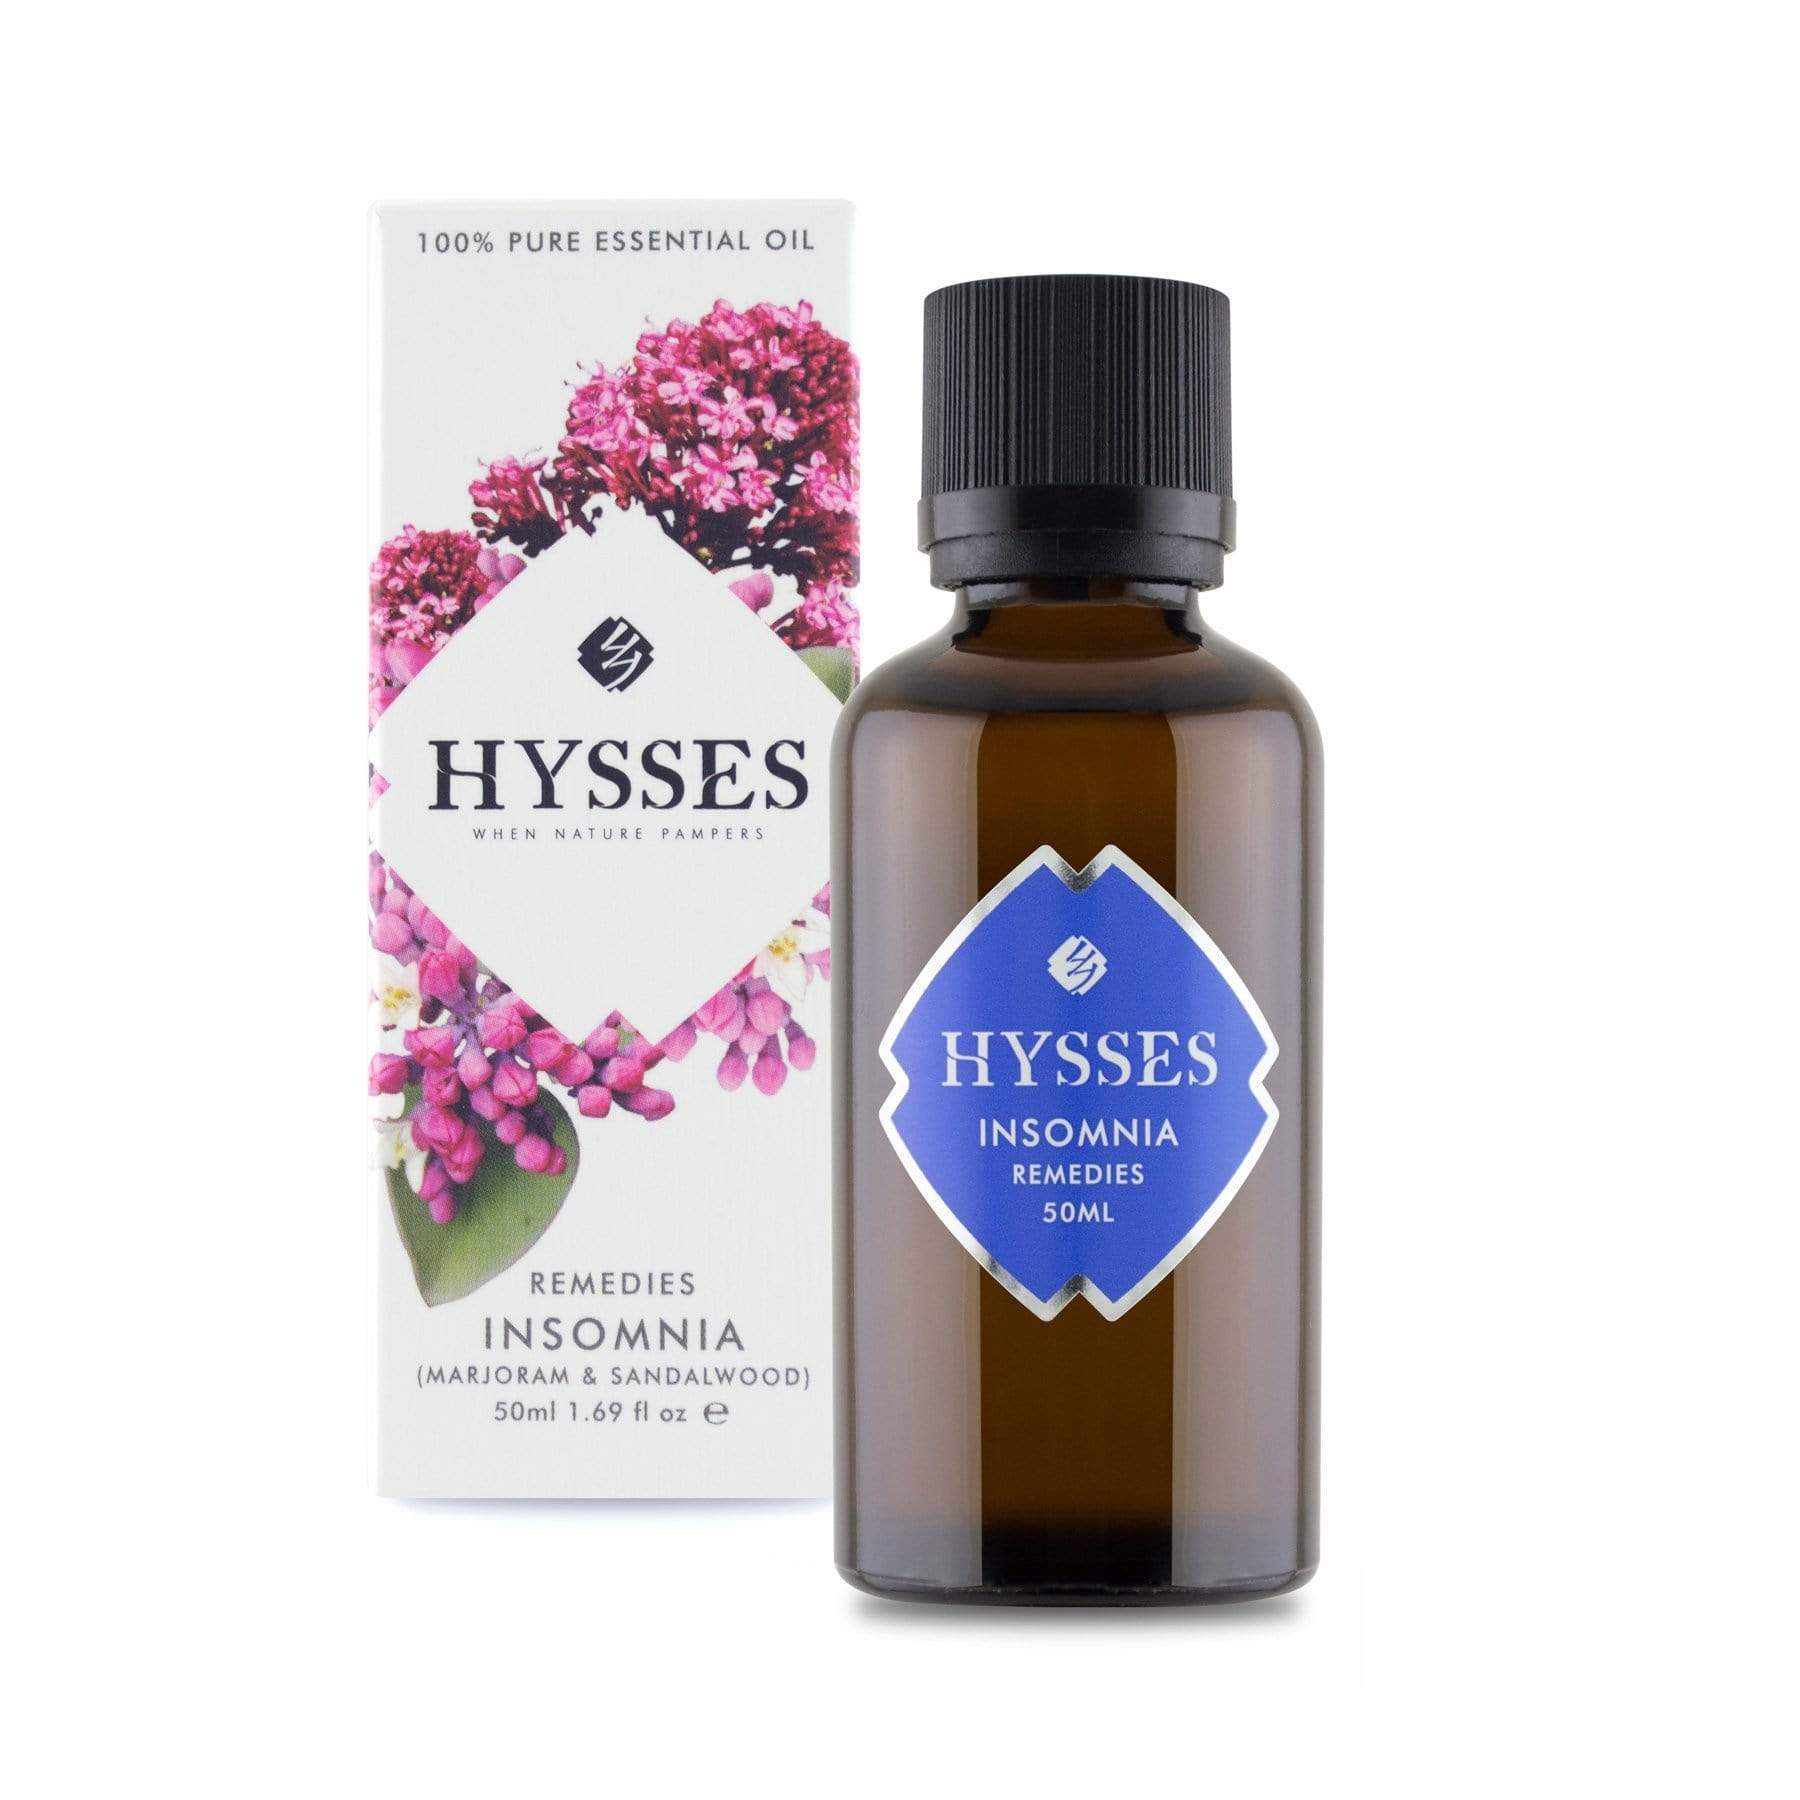 Hysses Essential Oil Remedies Insomnia, 50ml